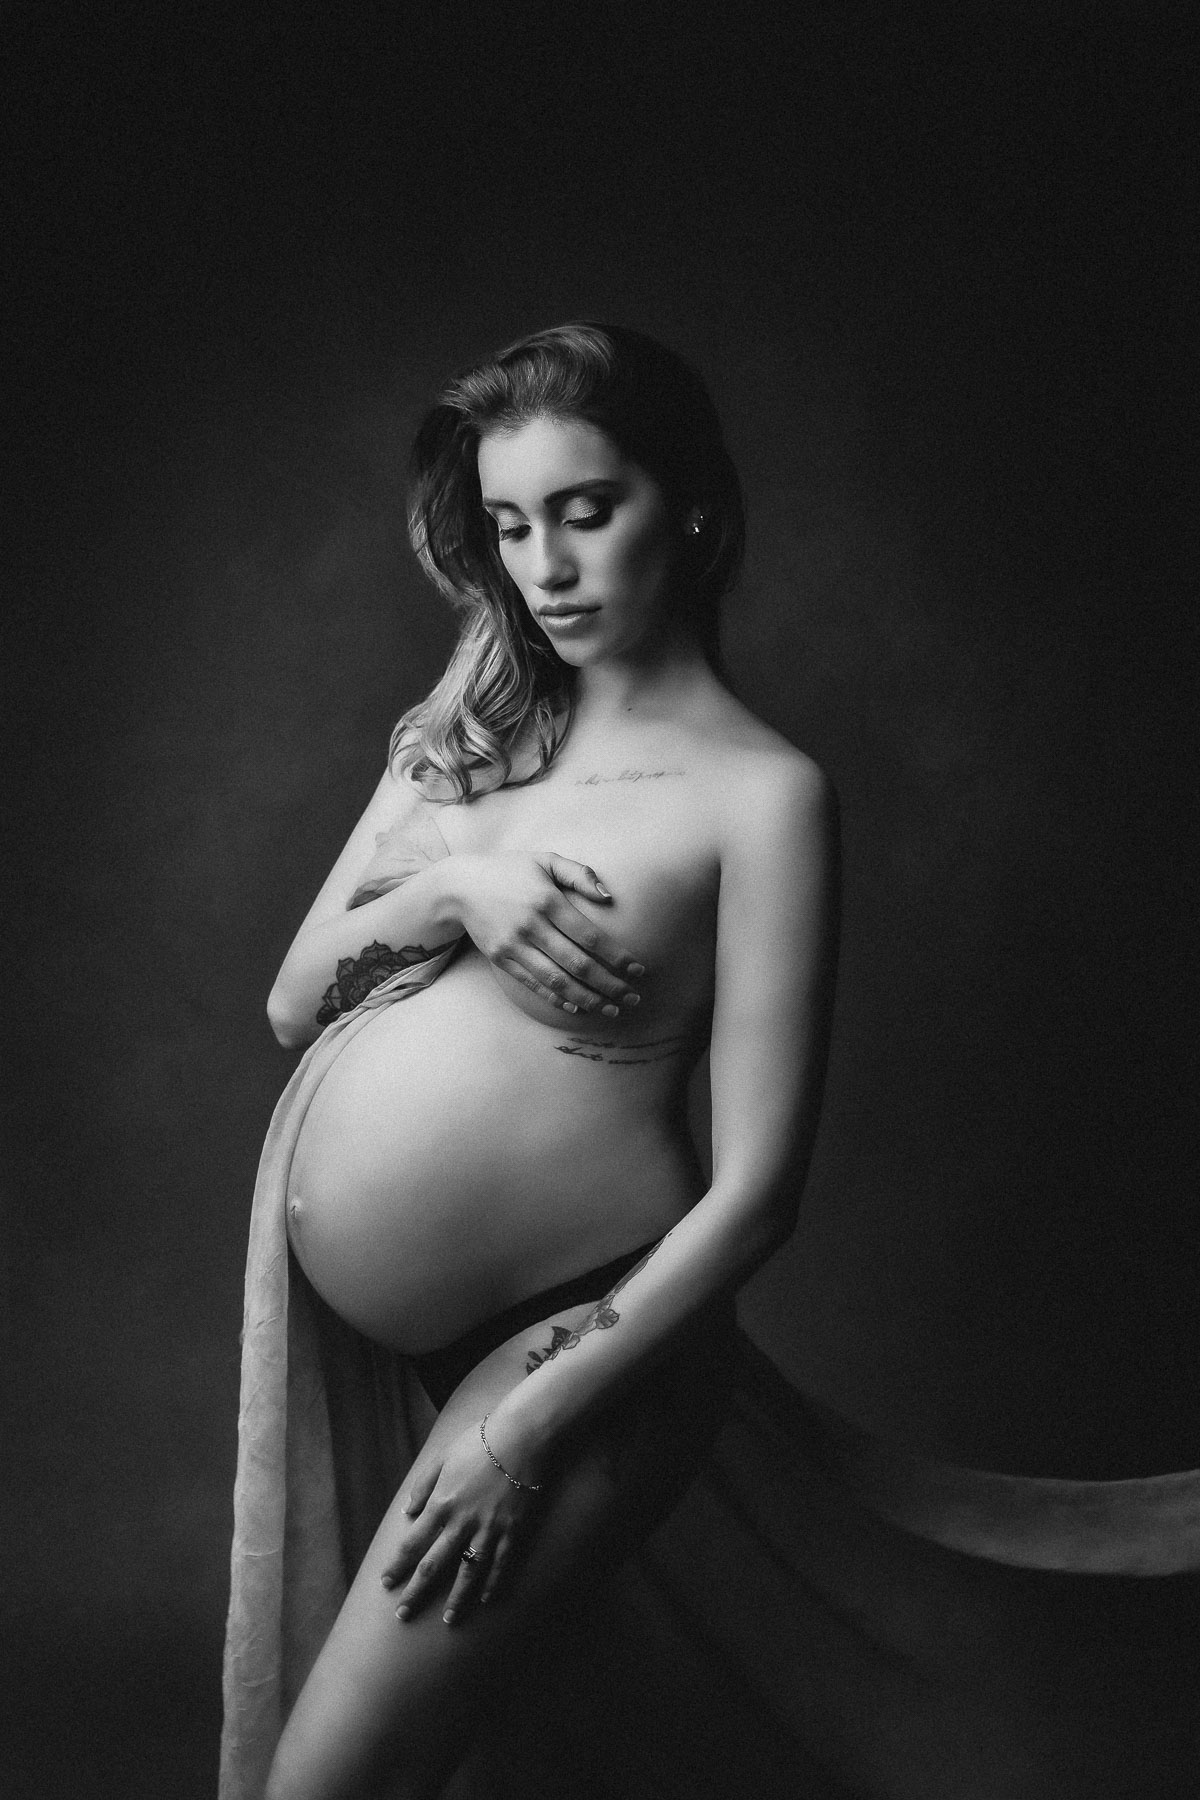 fashion fine art black and white maternity photo with professional studio lighting